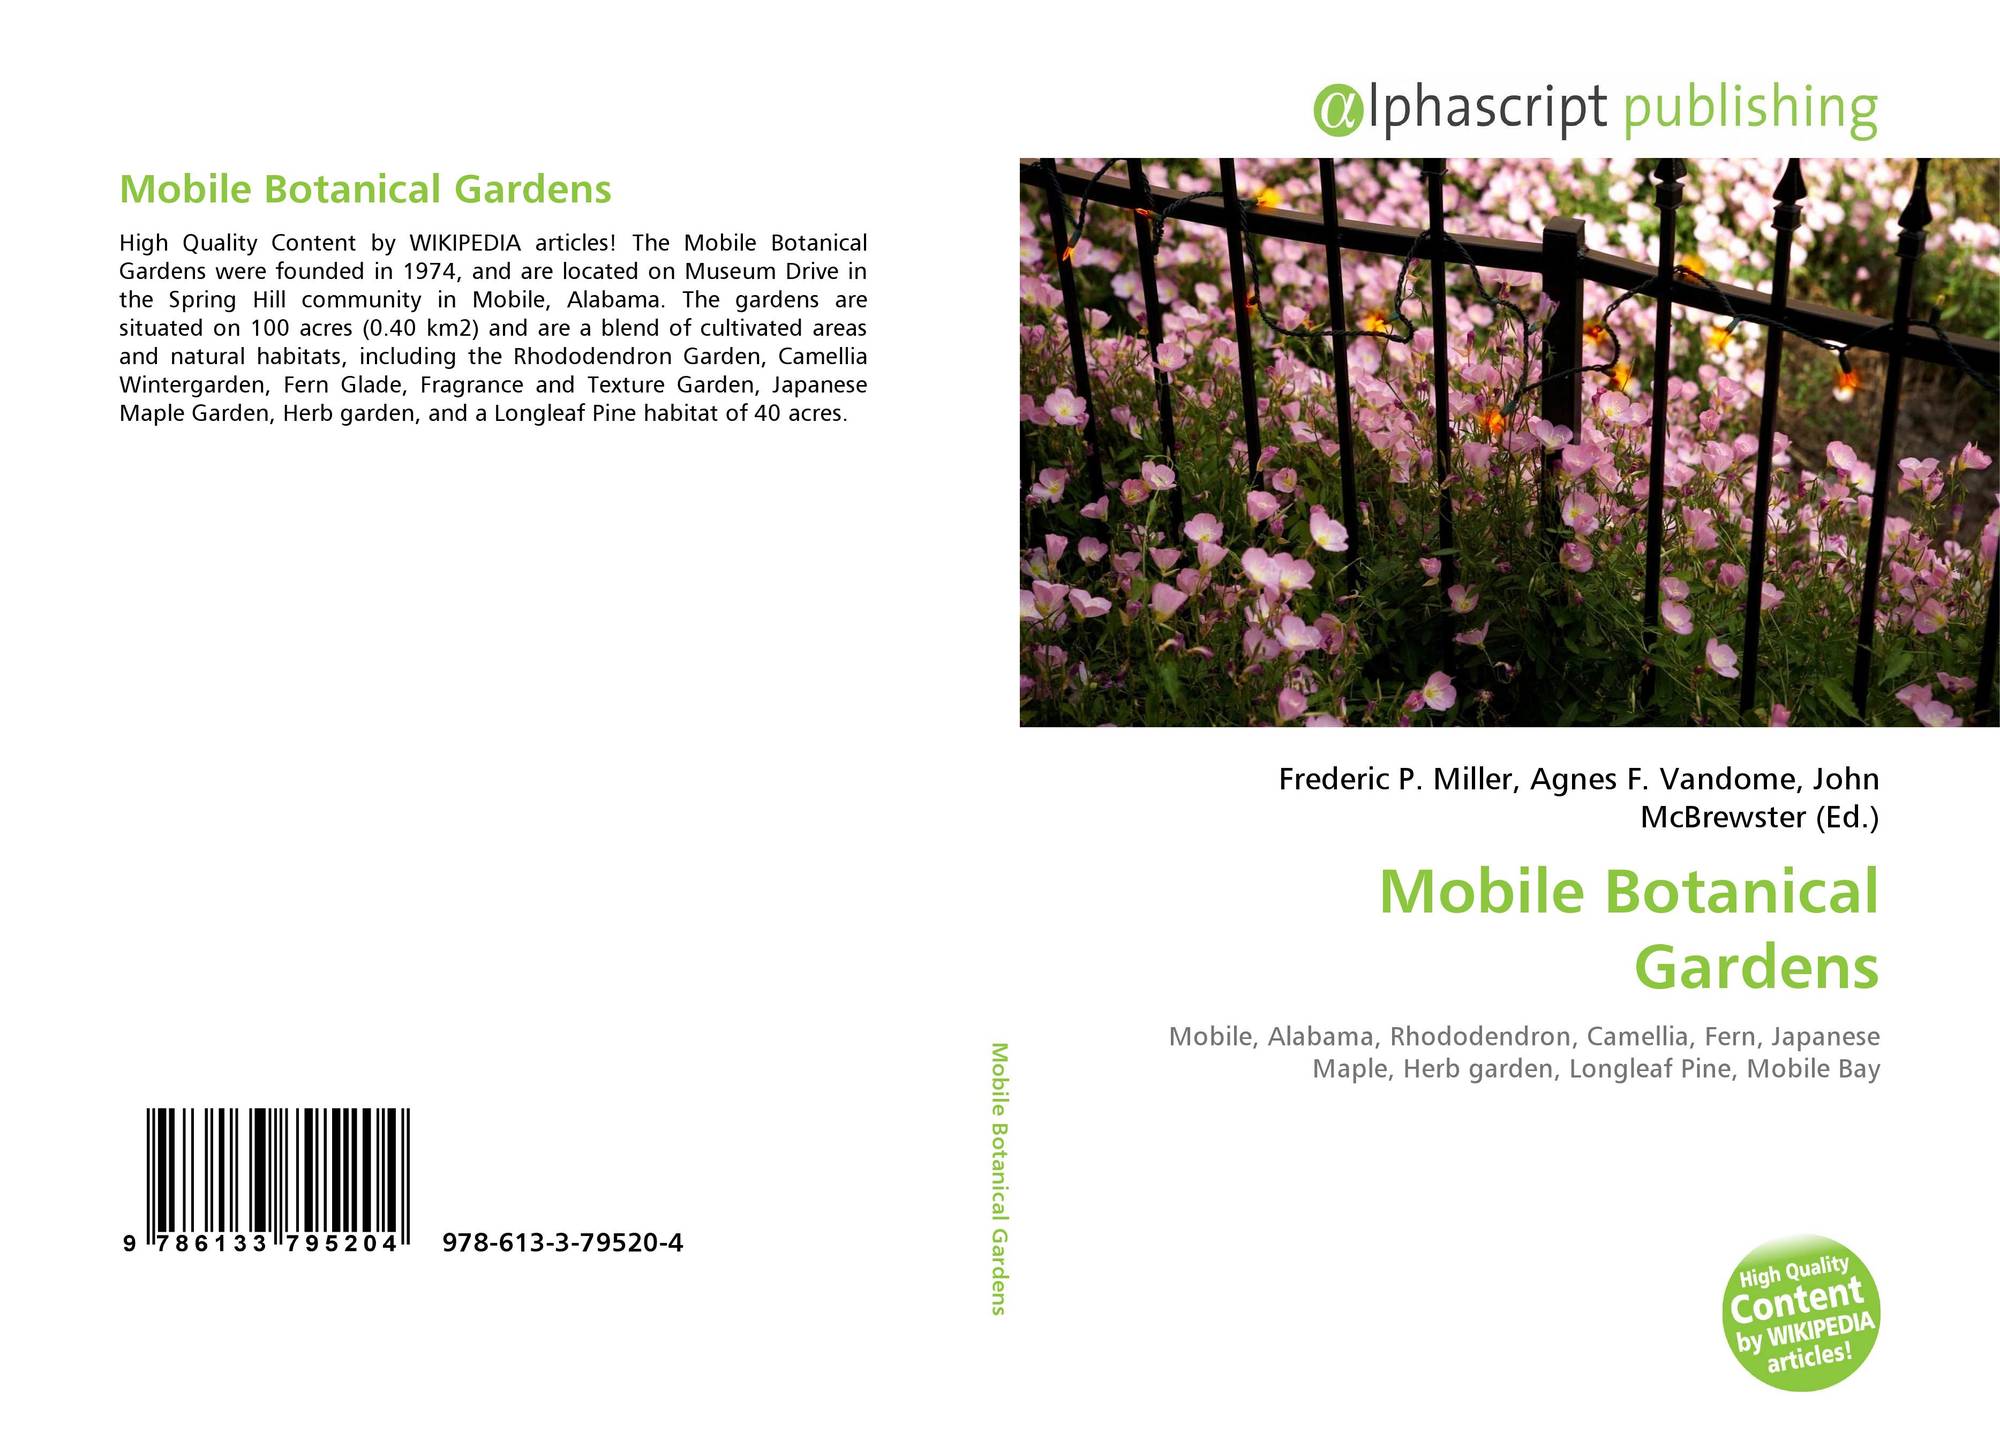 Mobile Botanical Gardens 978 613 3 79520 4 6133795204 9786133795204